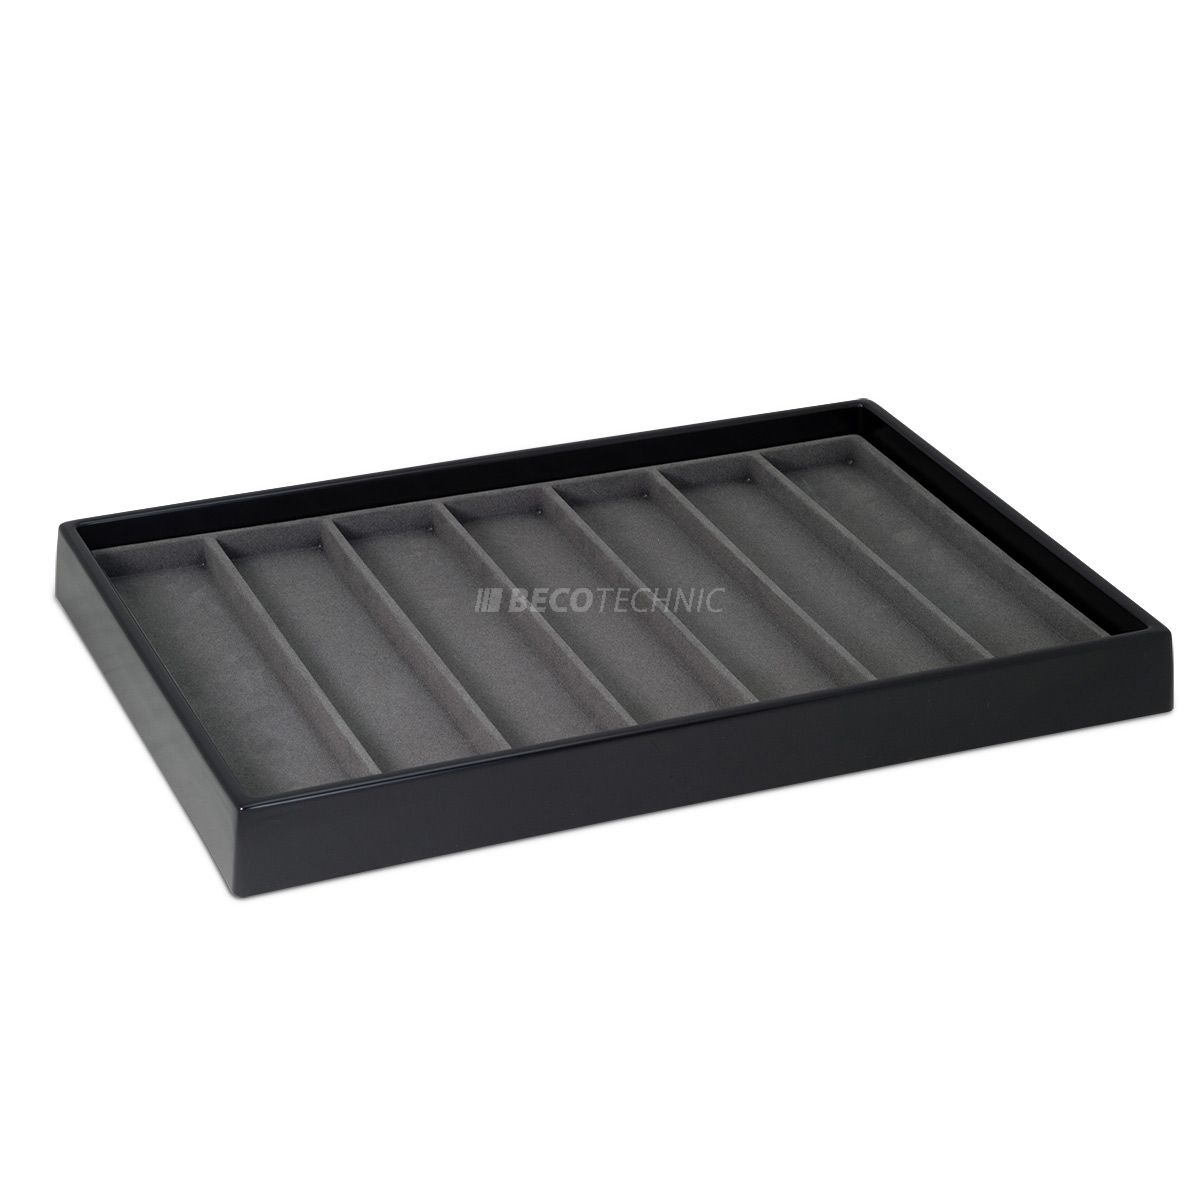 Großes Tablett, Kunststoff, schwarz, 461 x 320 x 40 mm